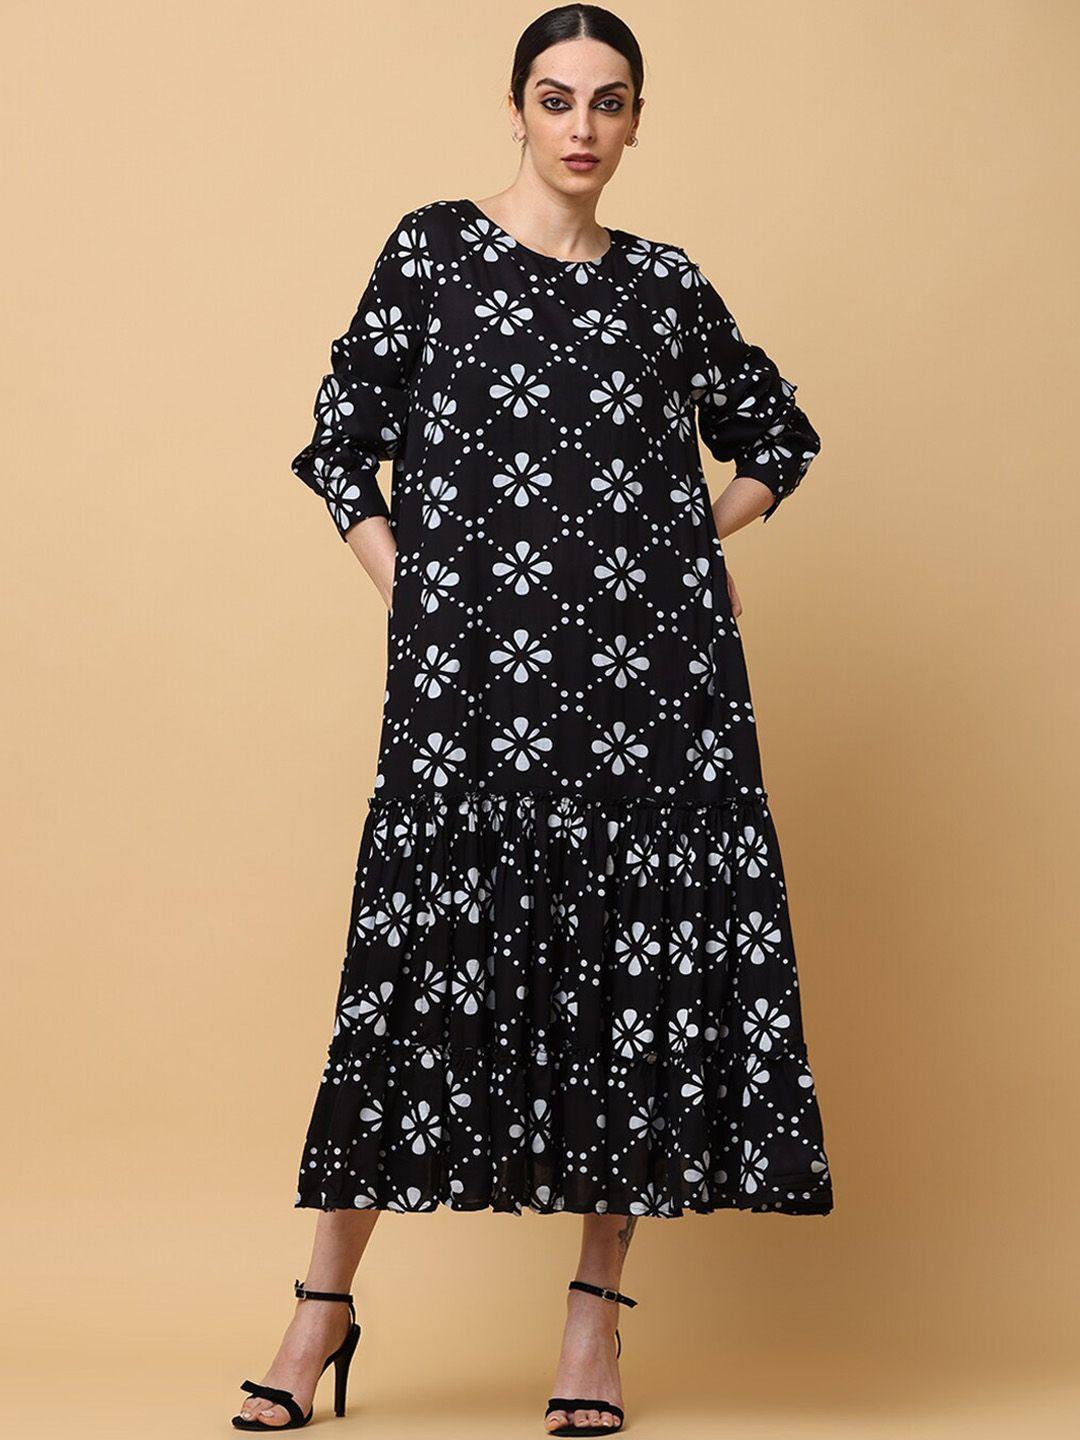 black & blah blah printed cotton tiered fit & flared ethnic dress